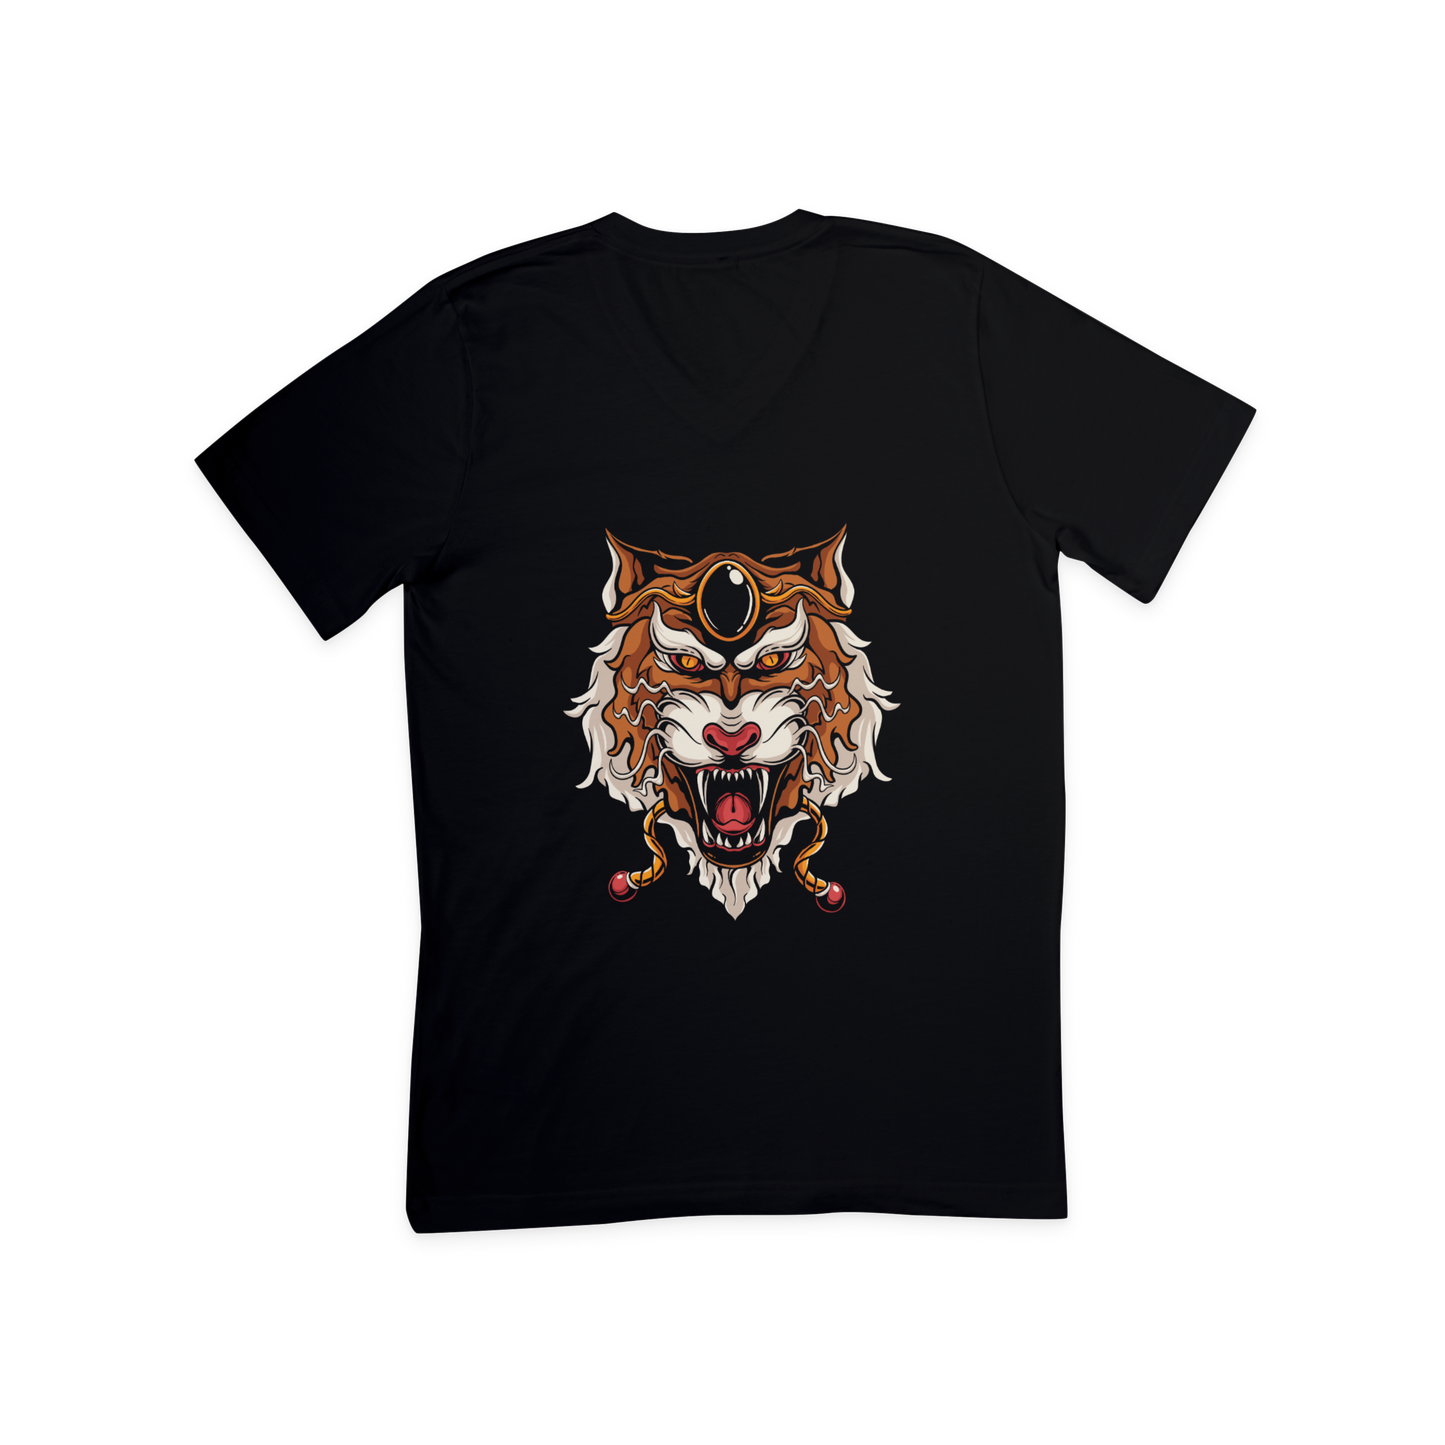 Tiger Design T shirt